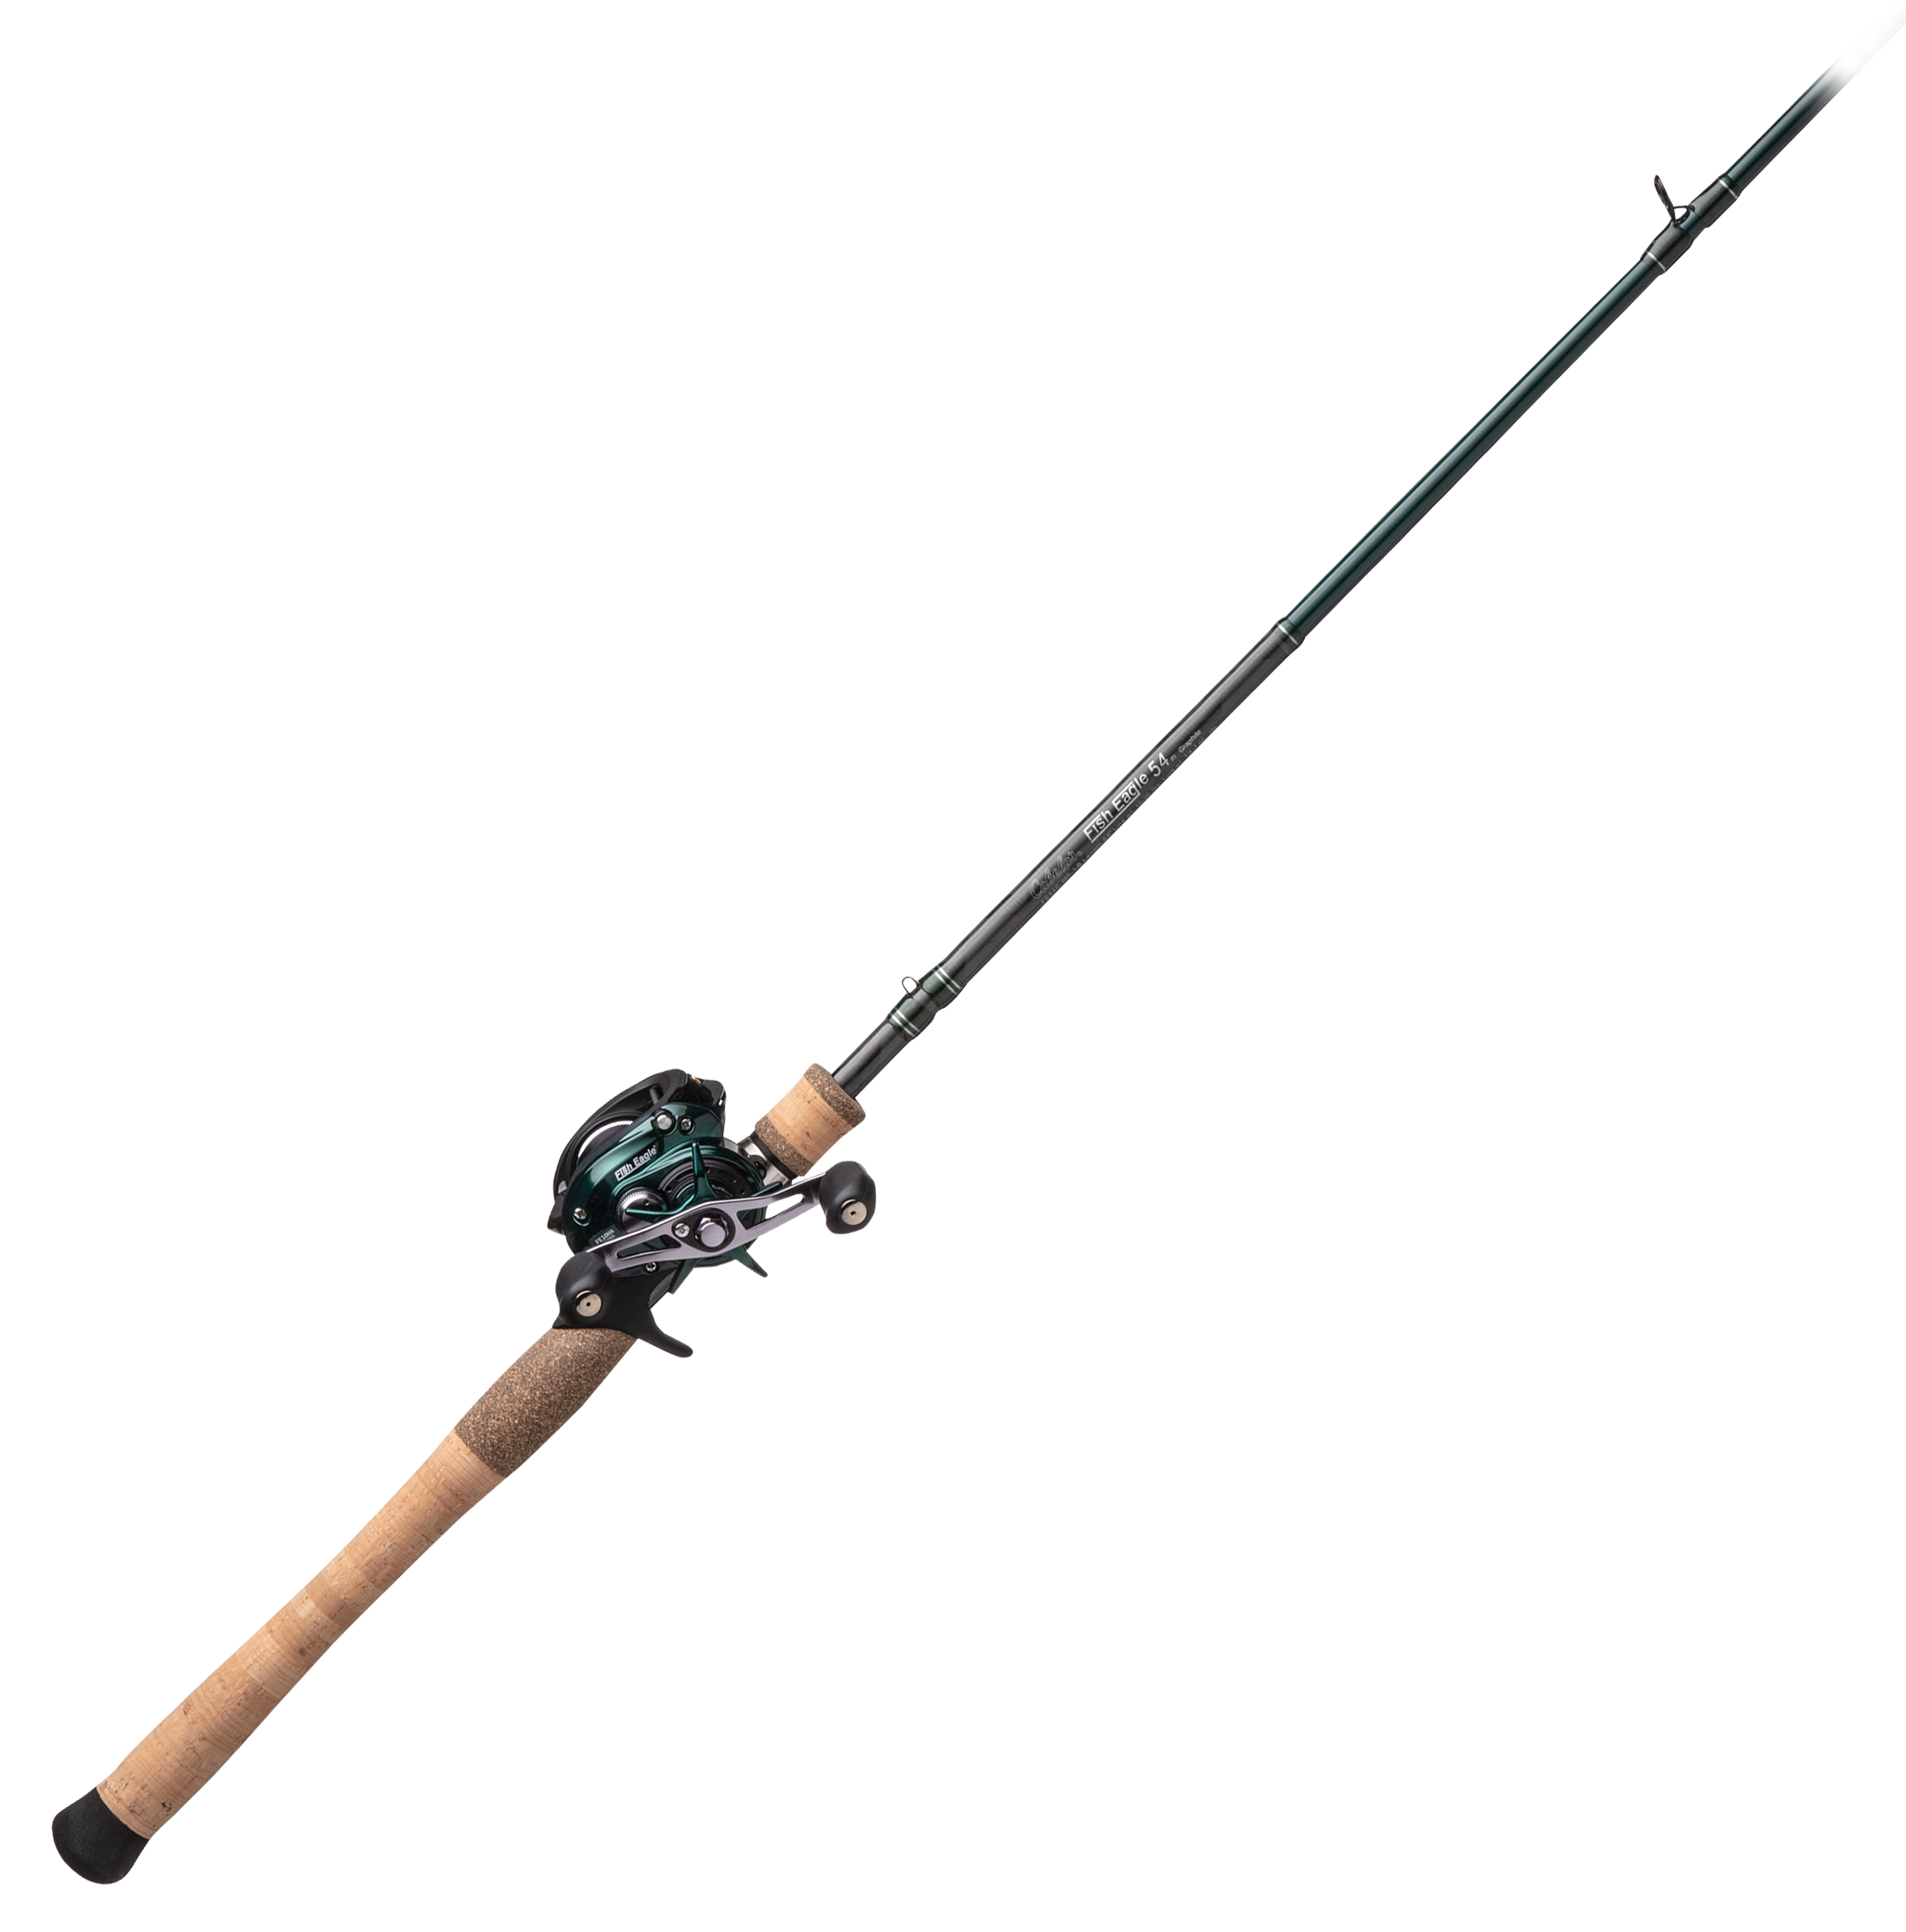 CABELA'S FISH EAGLE II 663 CX2 Graphite 6'6 baitcasting fishing rod 1  piece J $39.99 - PicClick